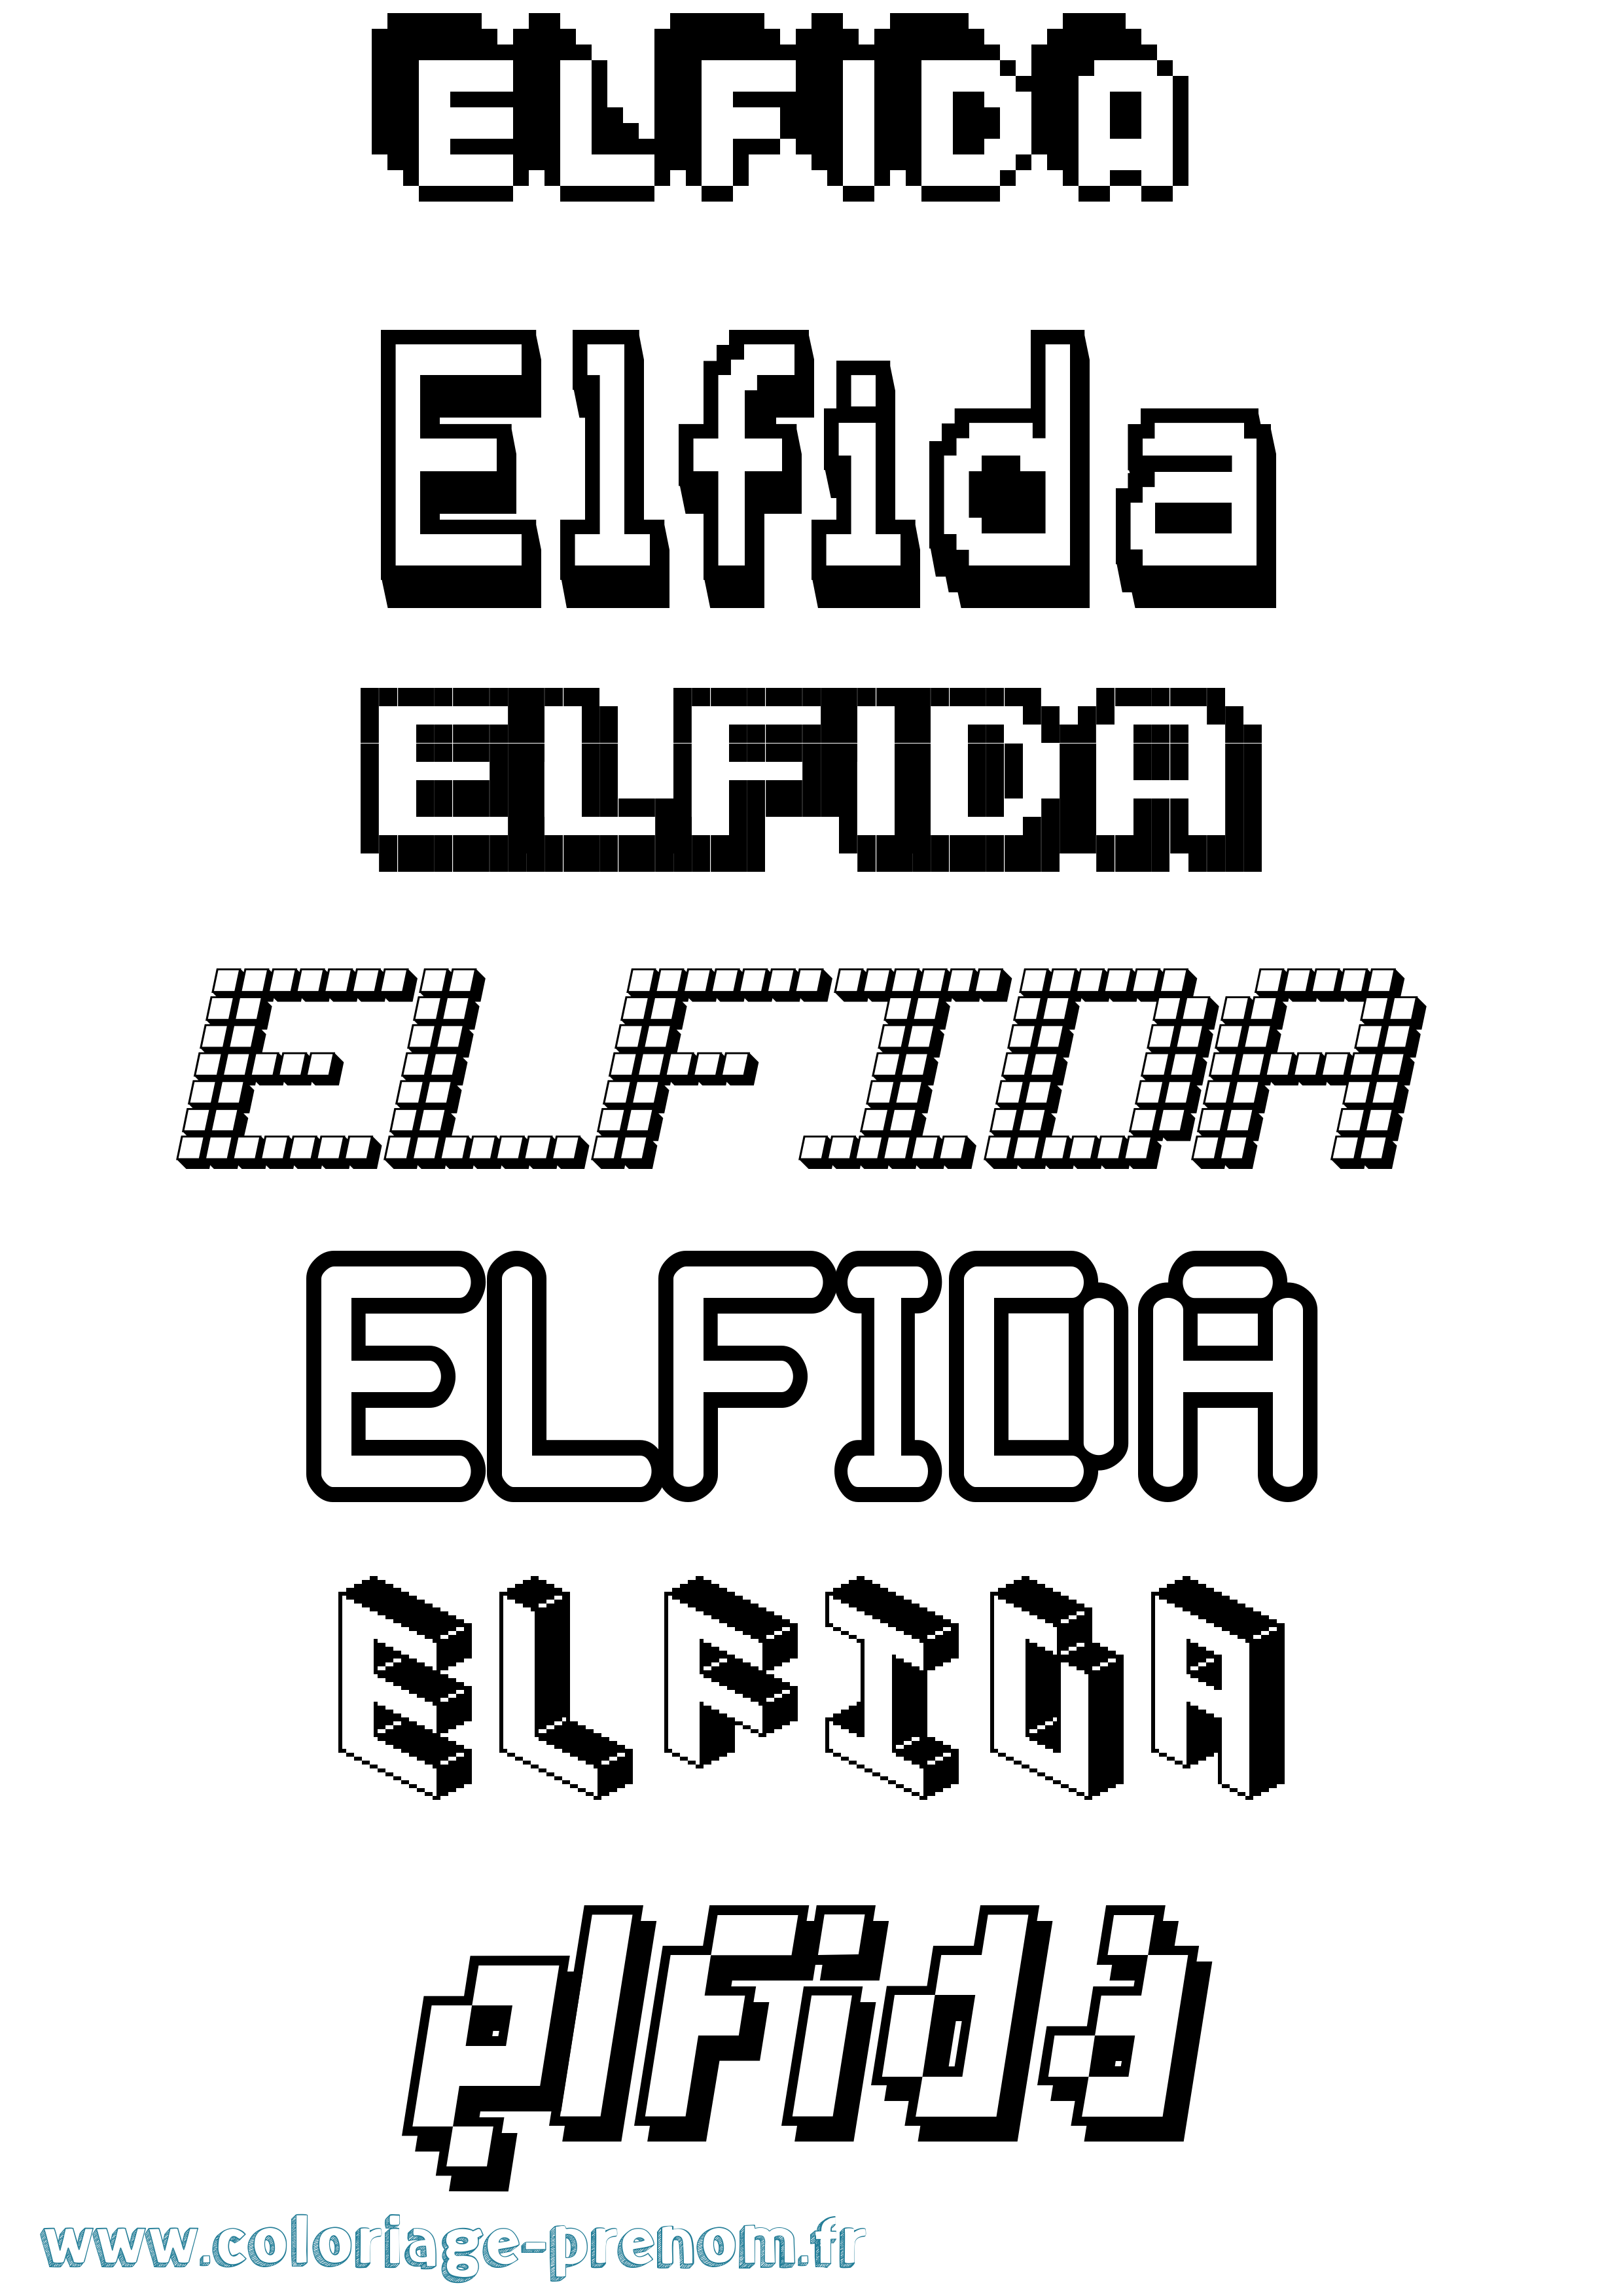 Coloriage prénom Elfida Pixel